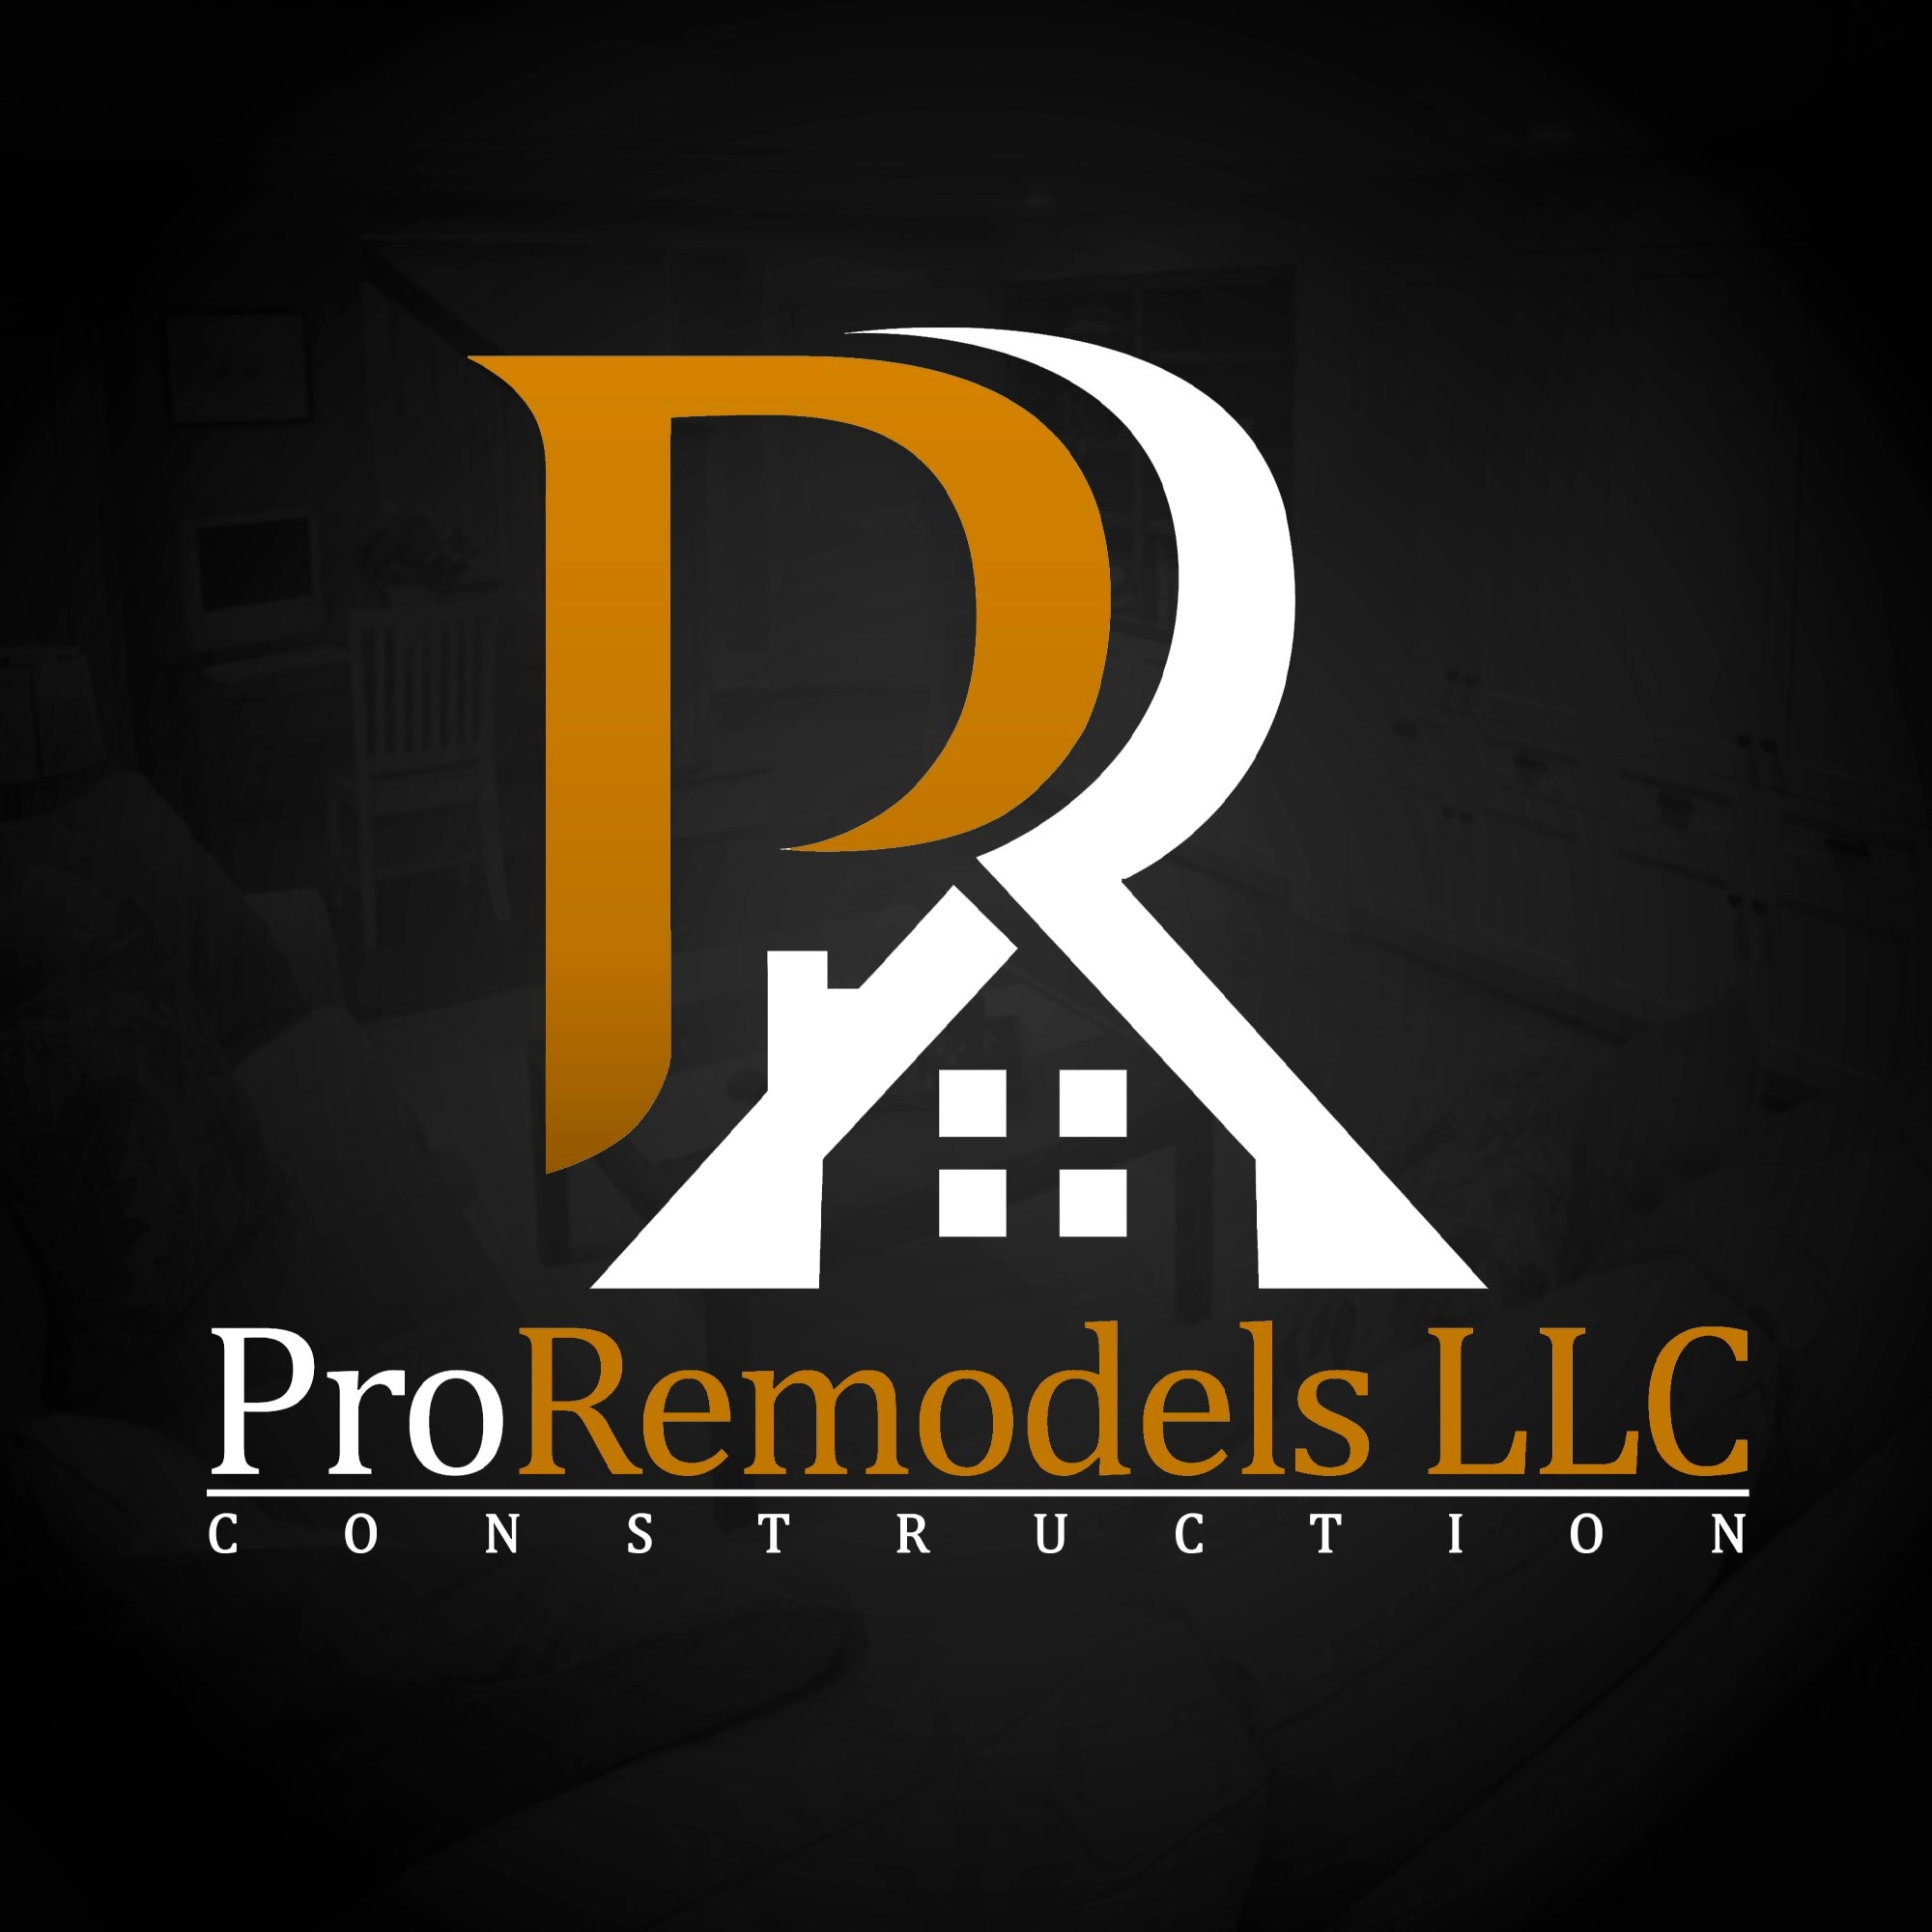 ProRemodels LLC